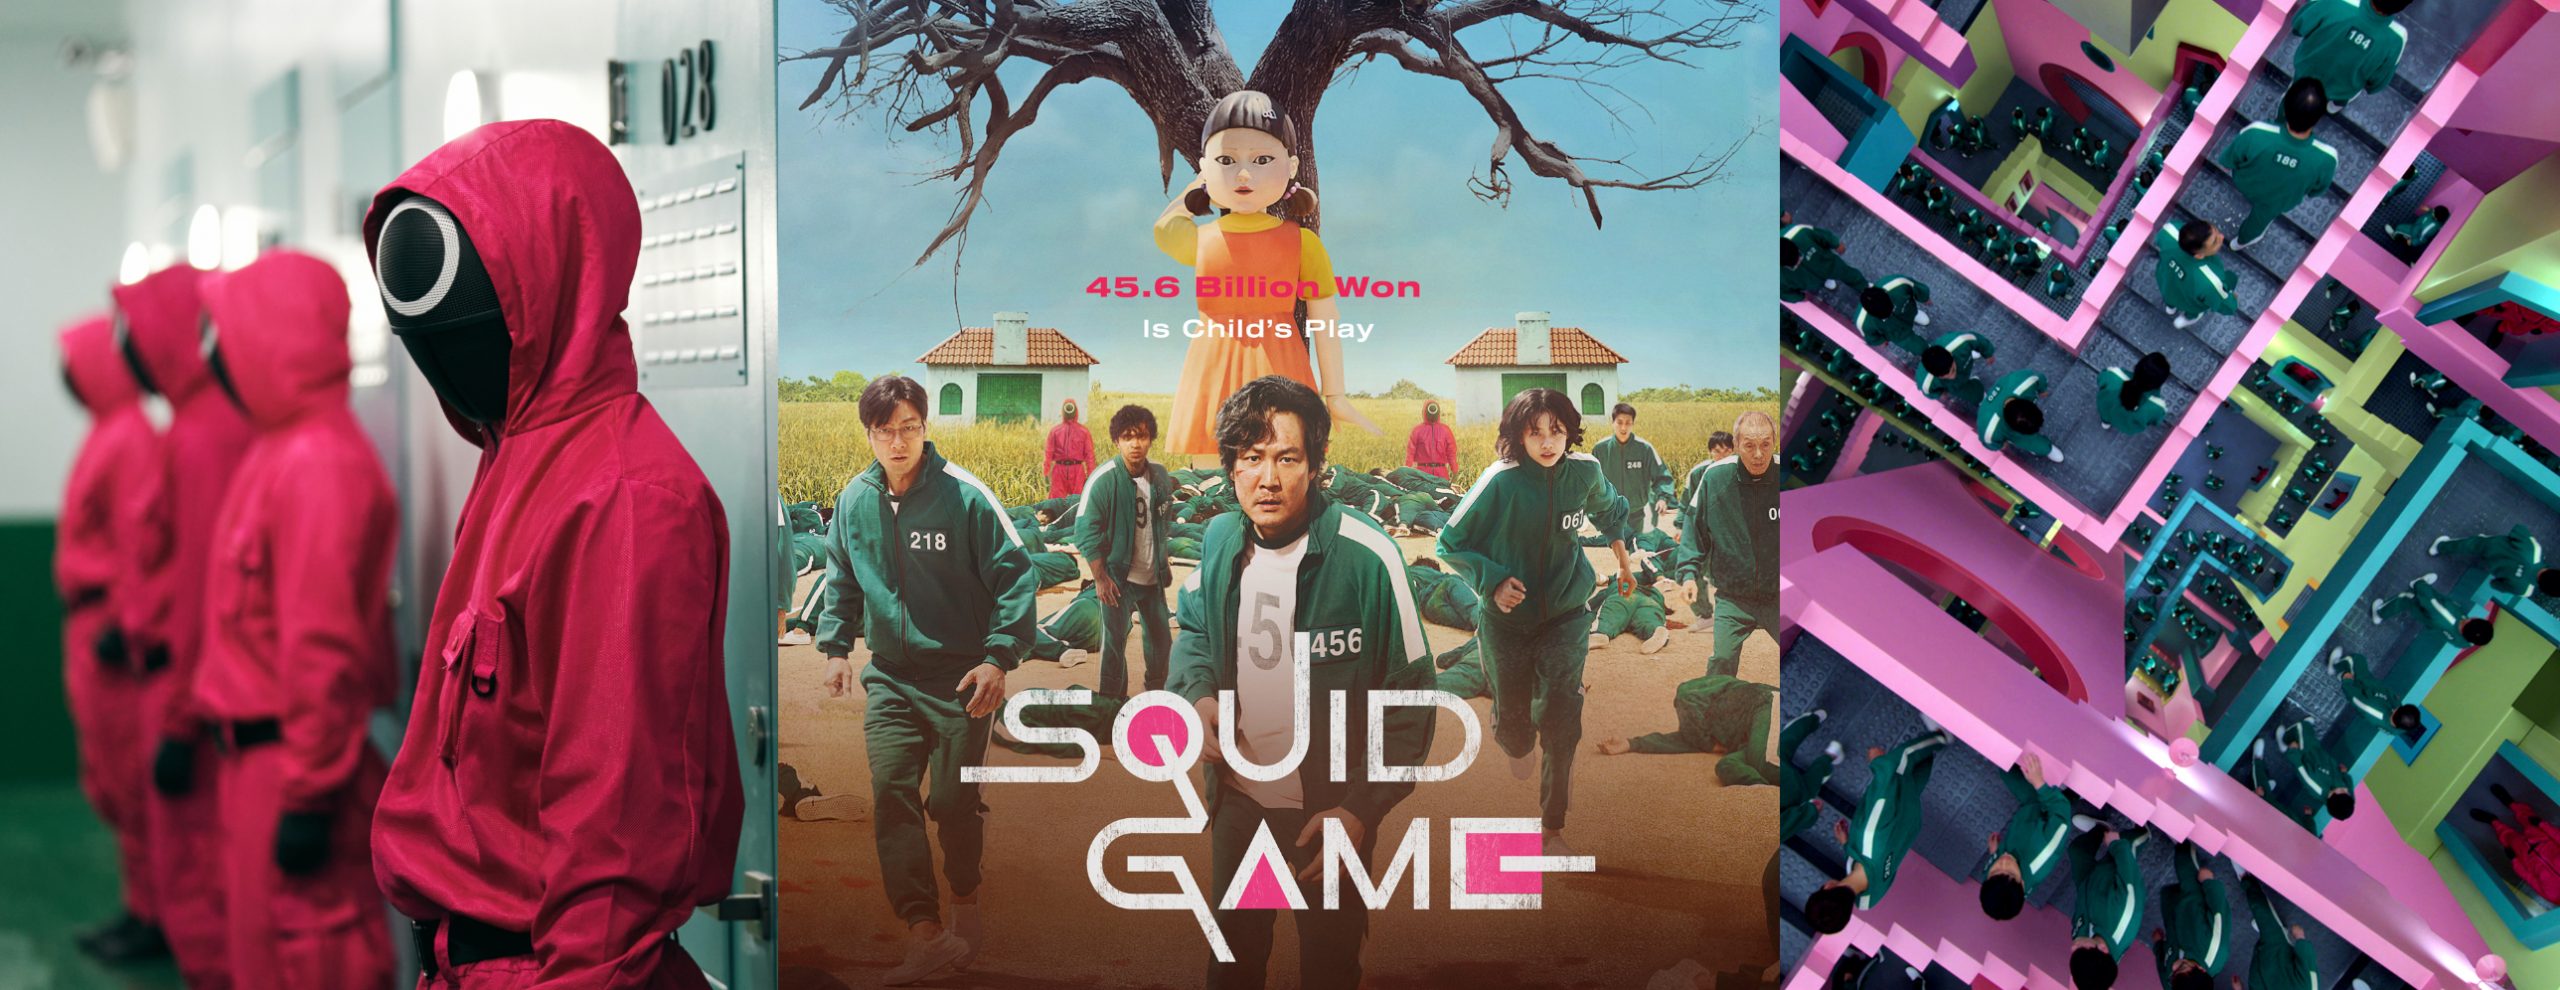 Squid Game” (2021 Netflix Drama): Cast & Summary - Kpopmap